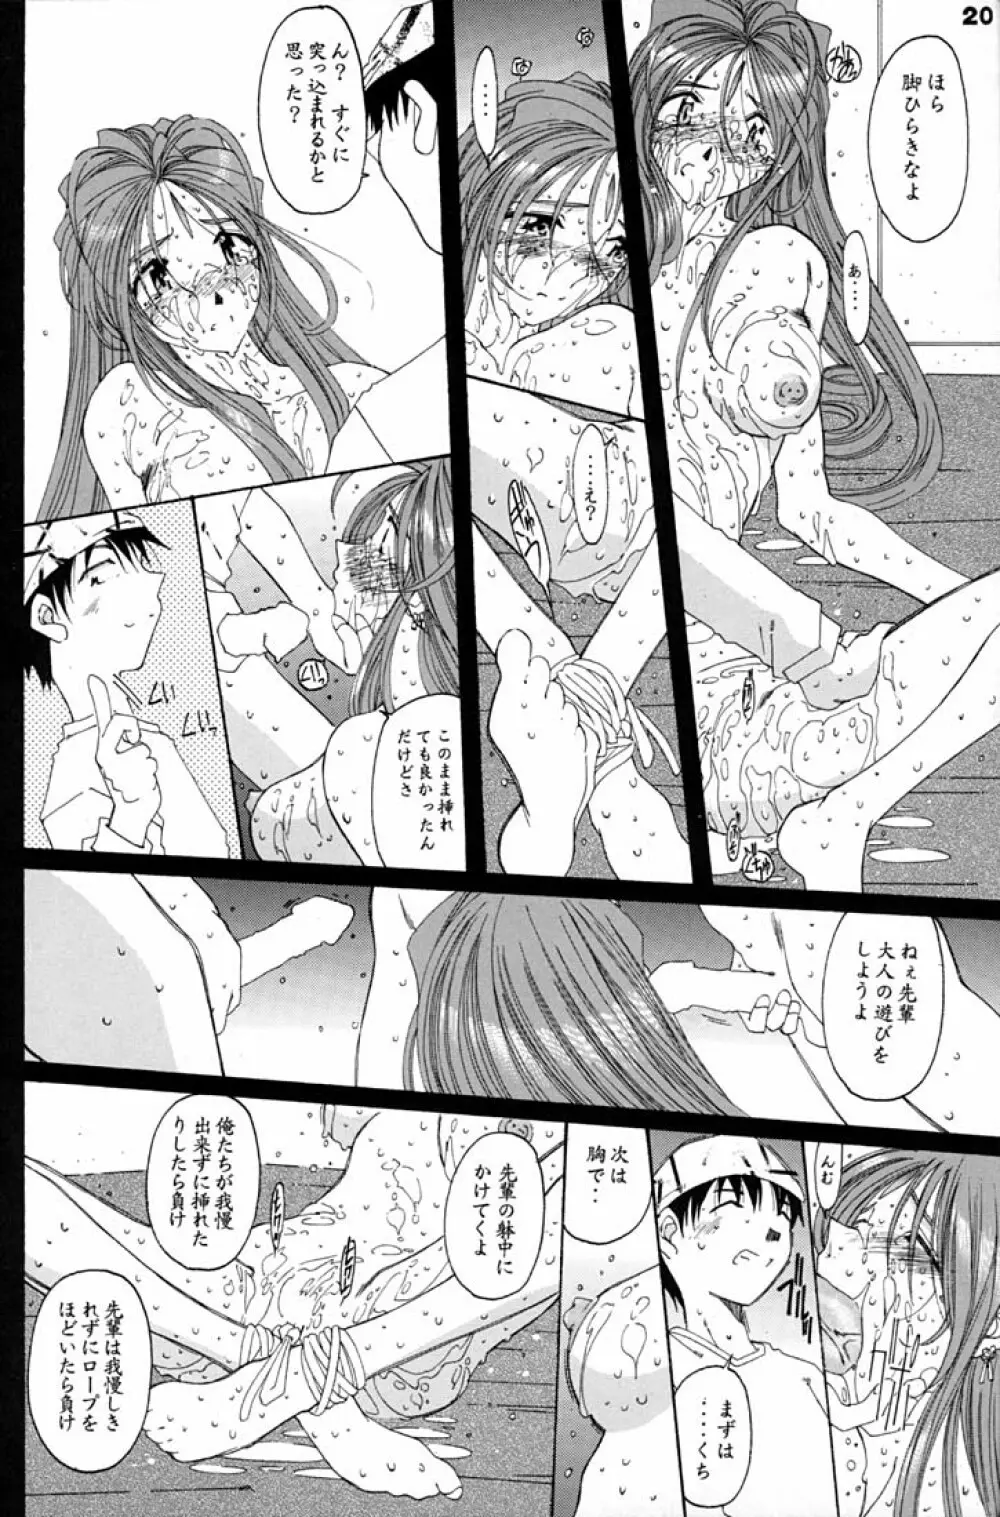 Fujishima Spirits 2 - page19